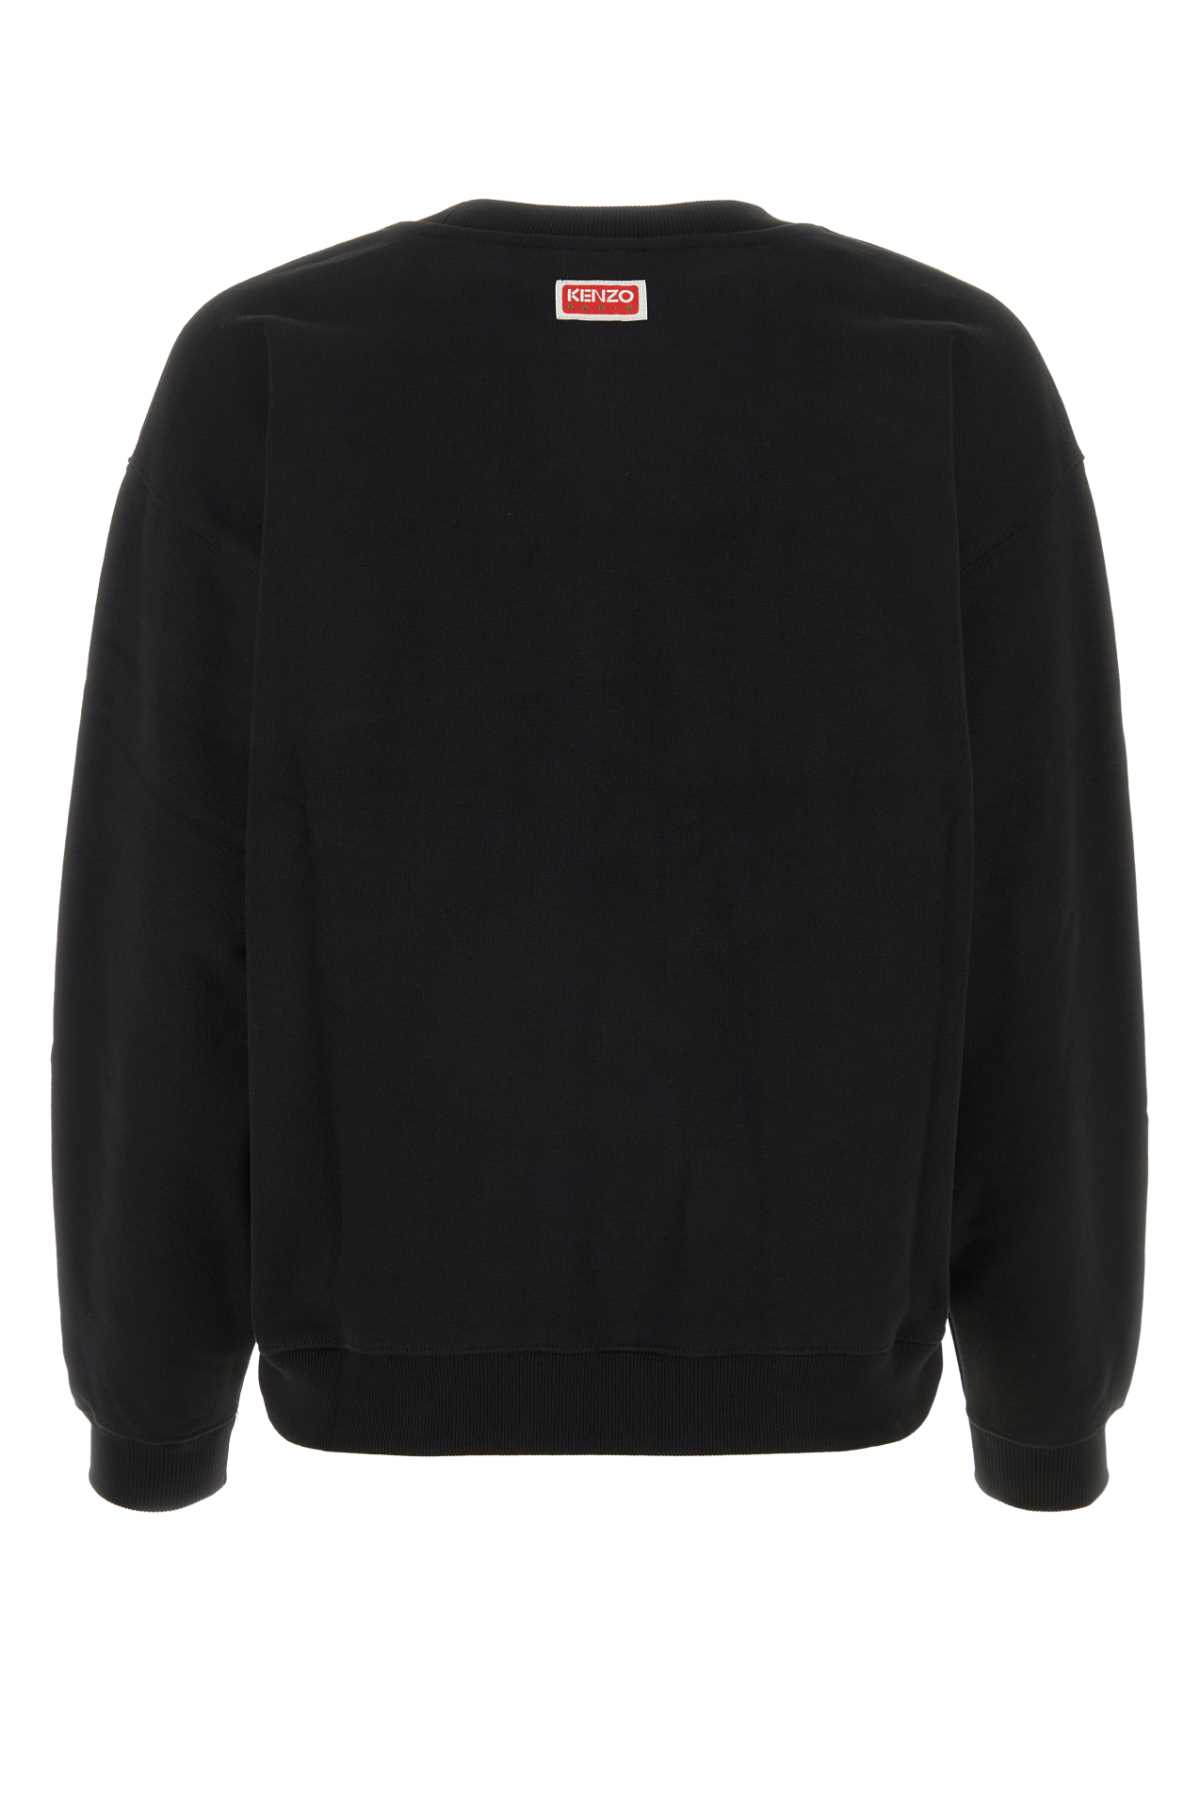 Kenzo Black Stretch Cotton Sweatshirt